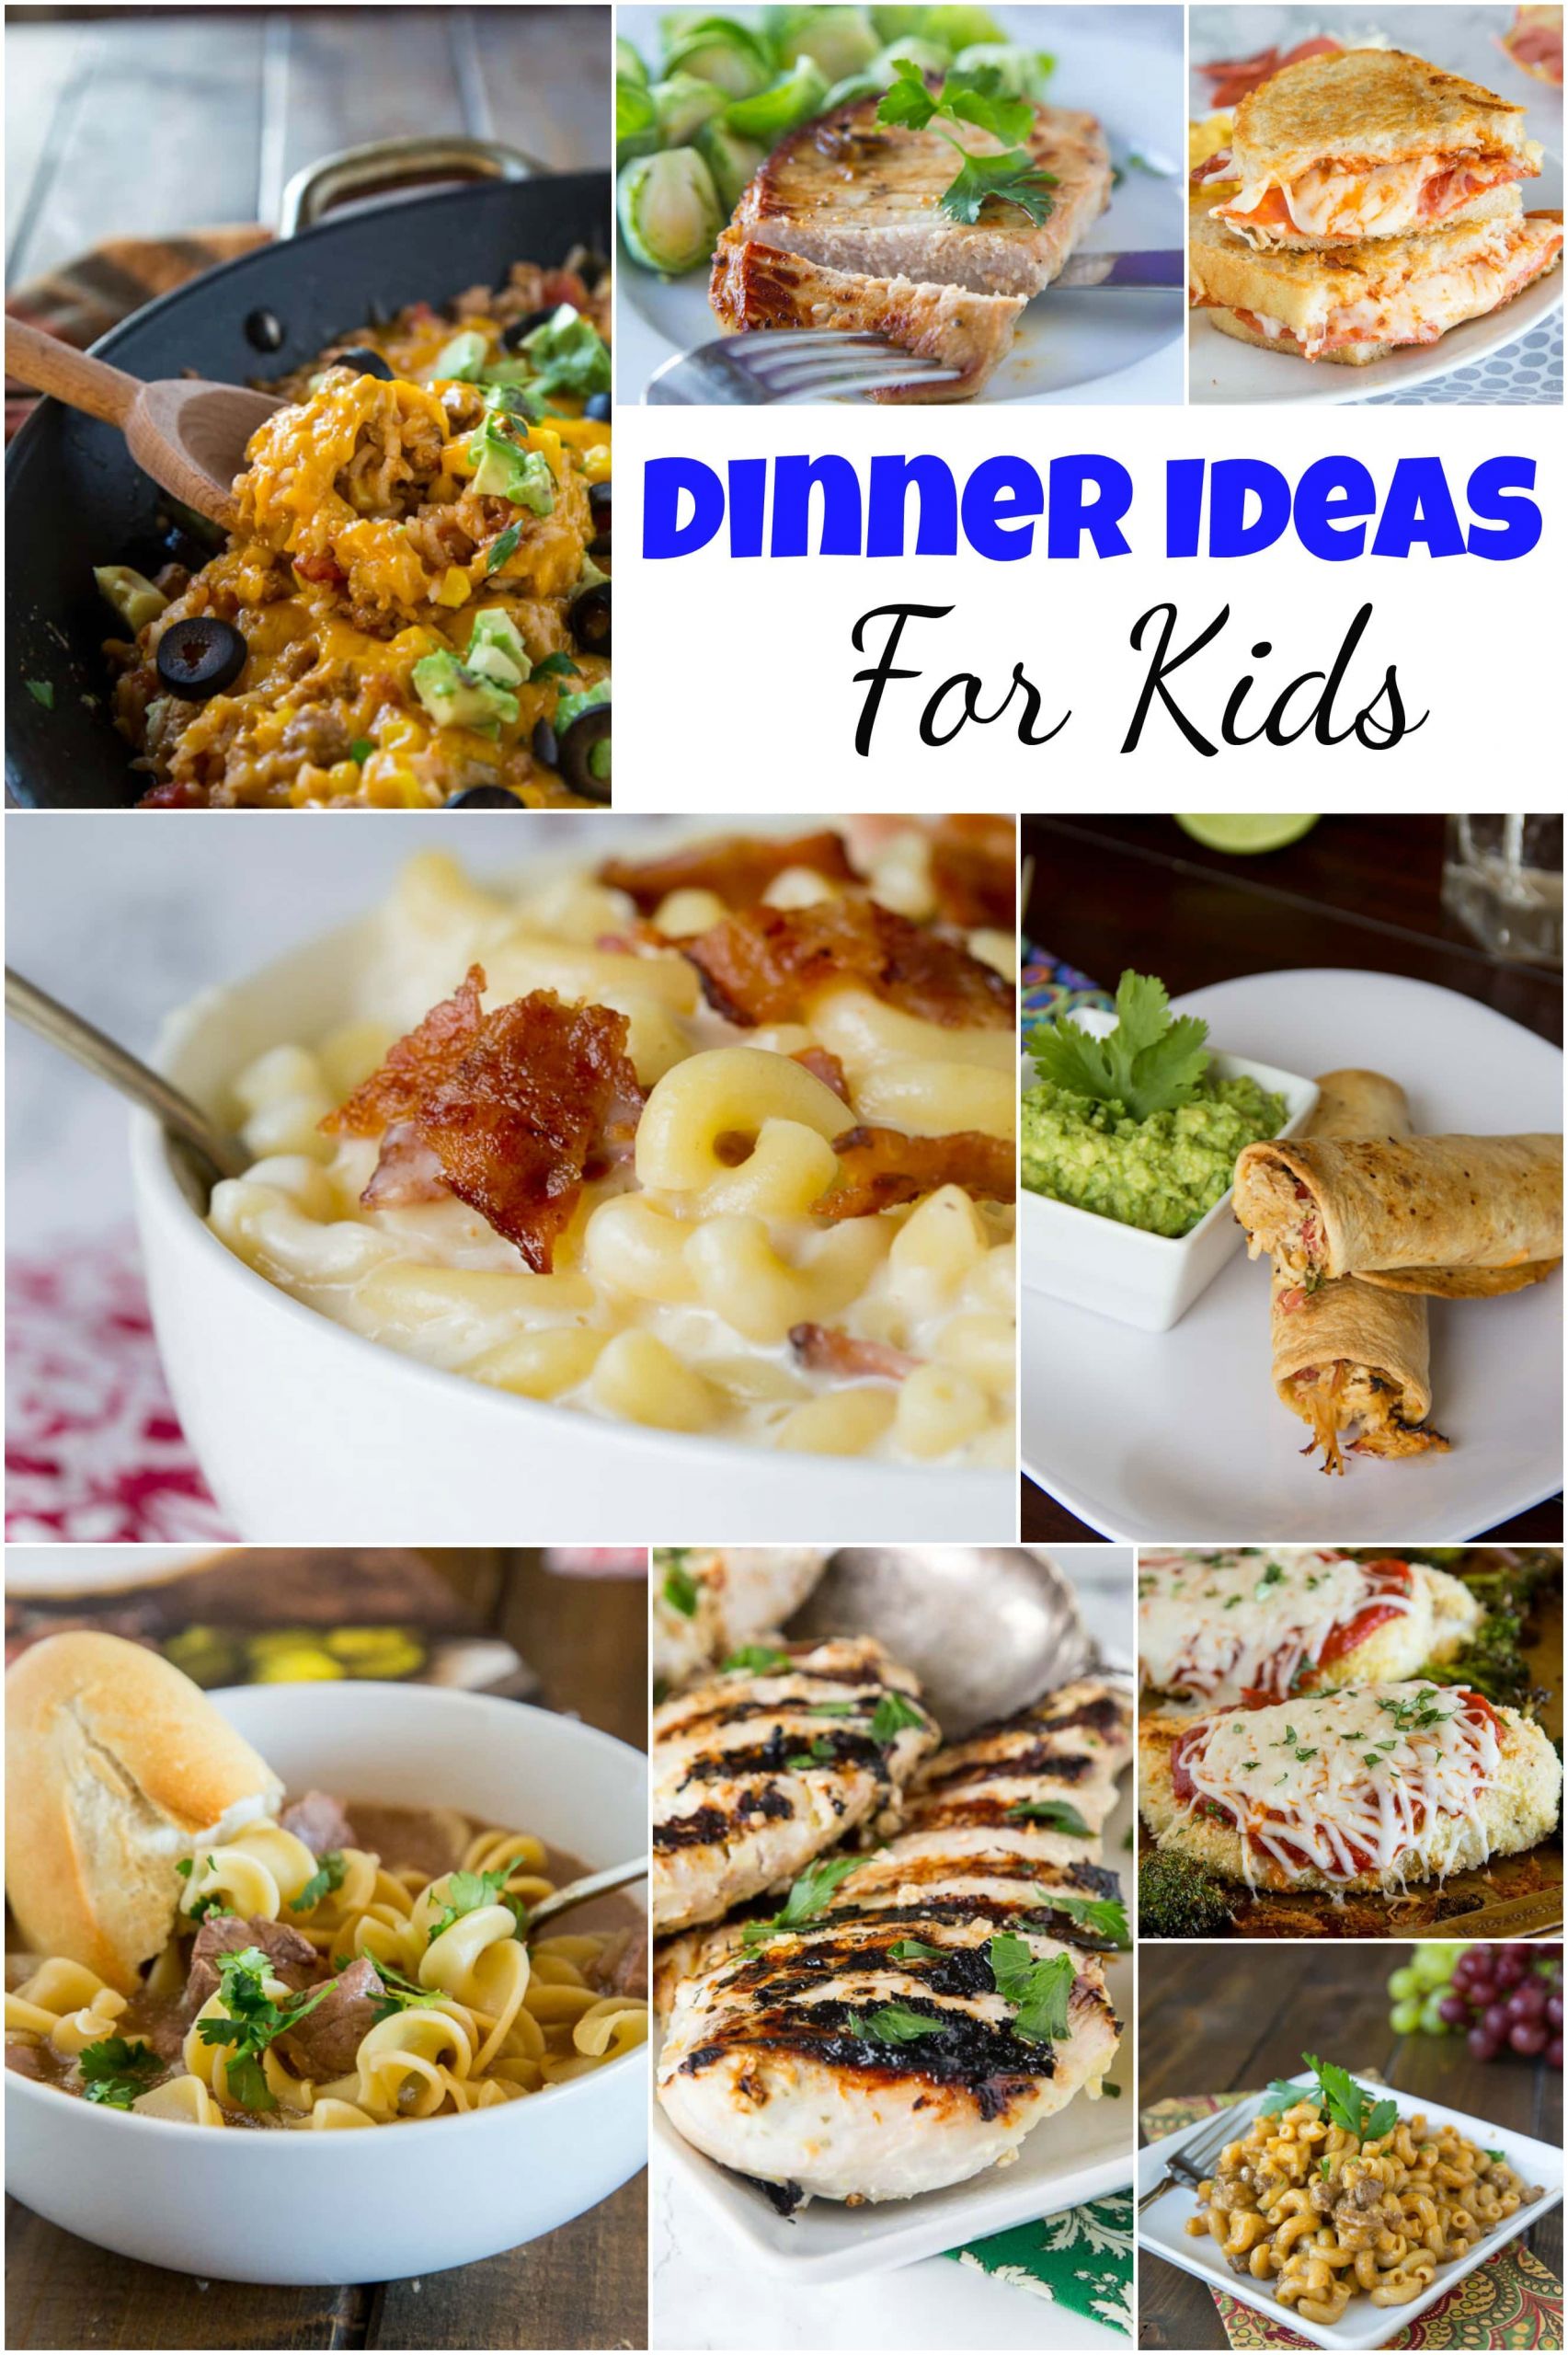 Top 15 Fun Dinner Ideas for Kids